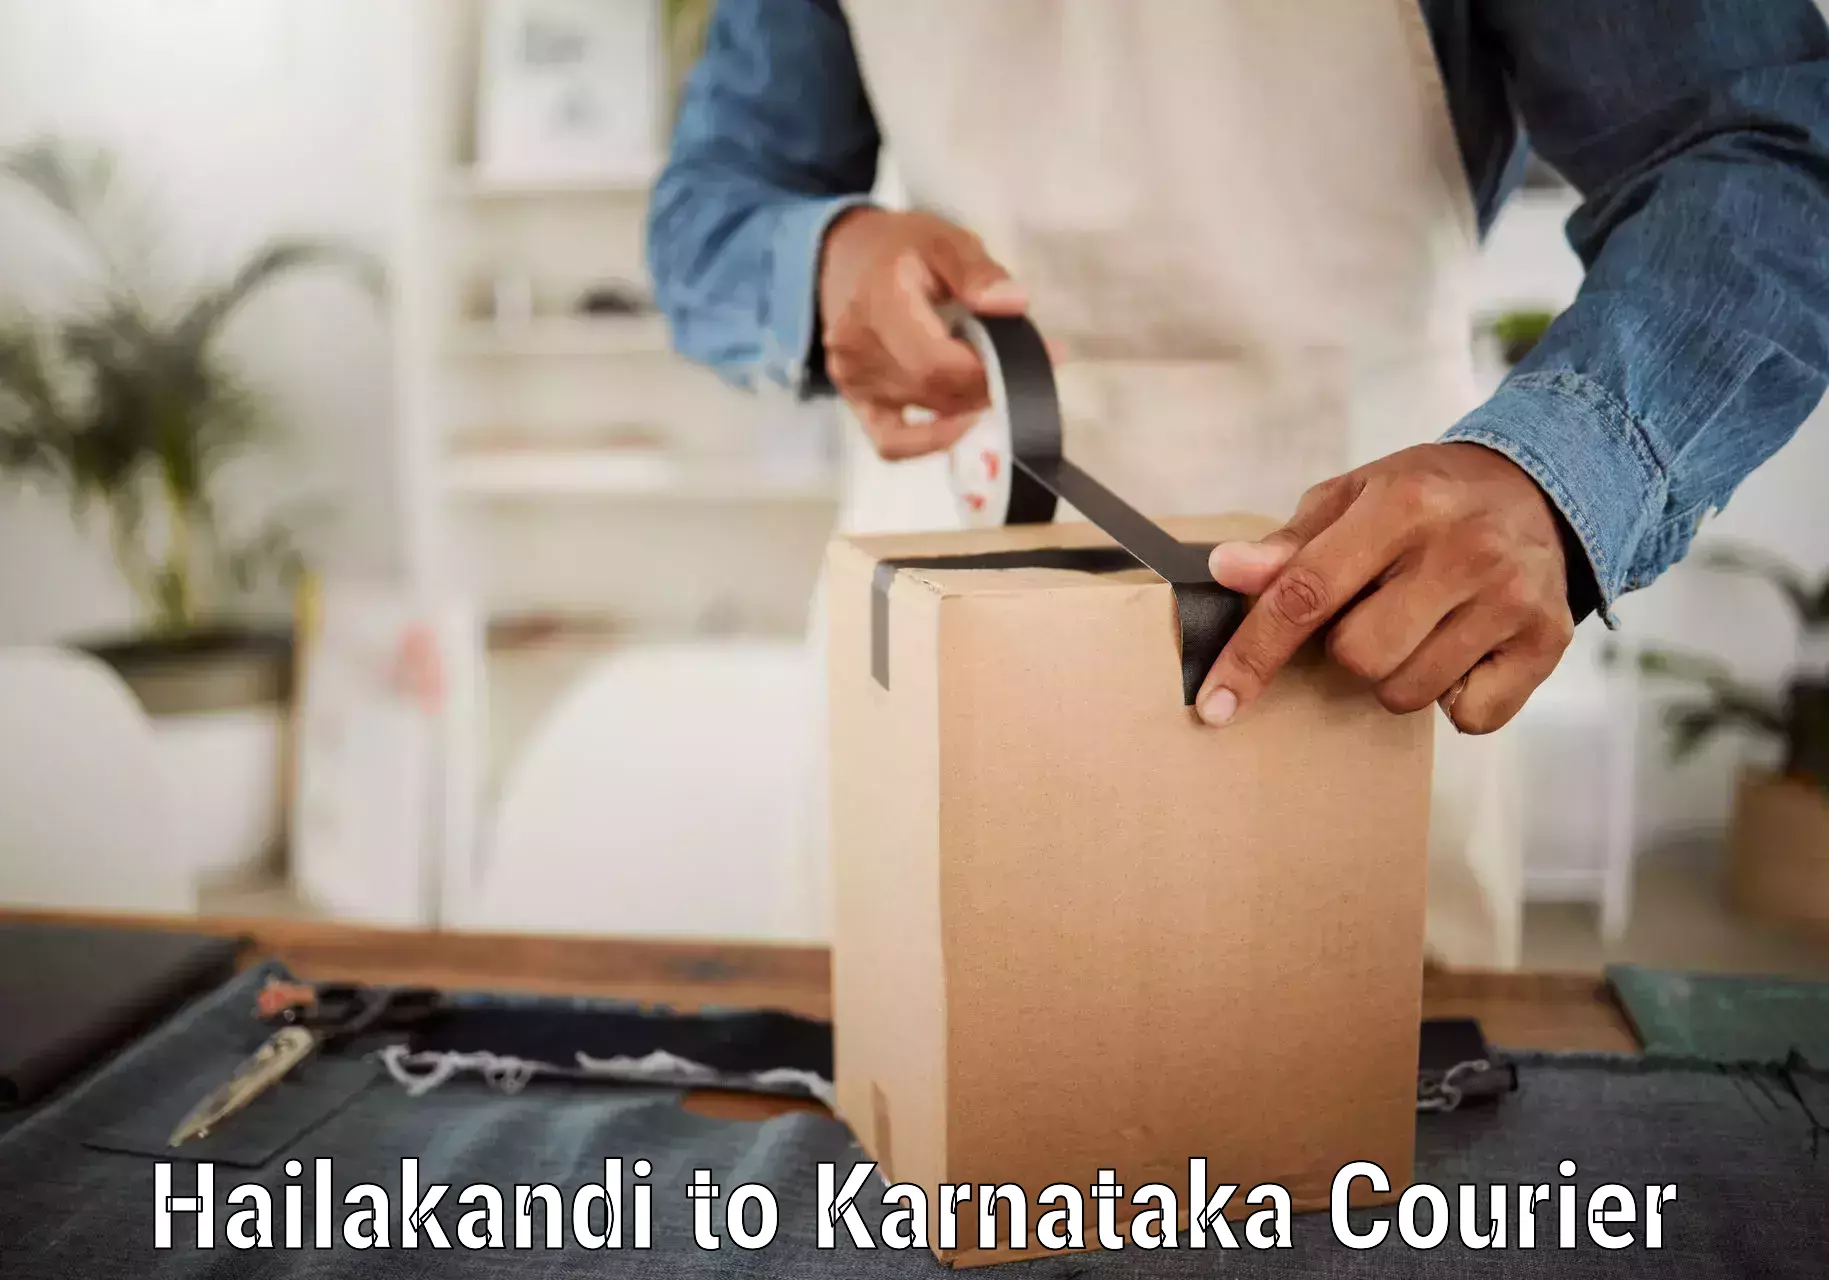 User-friendly delivery service Hailakandi to Mangalore